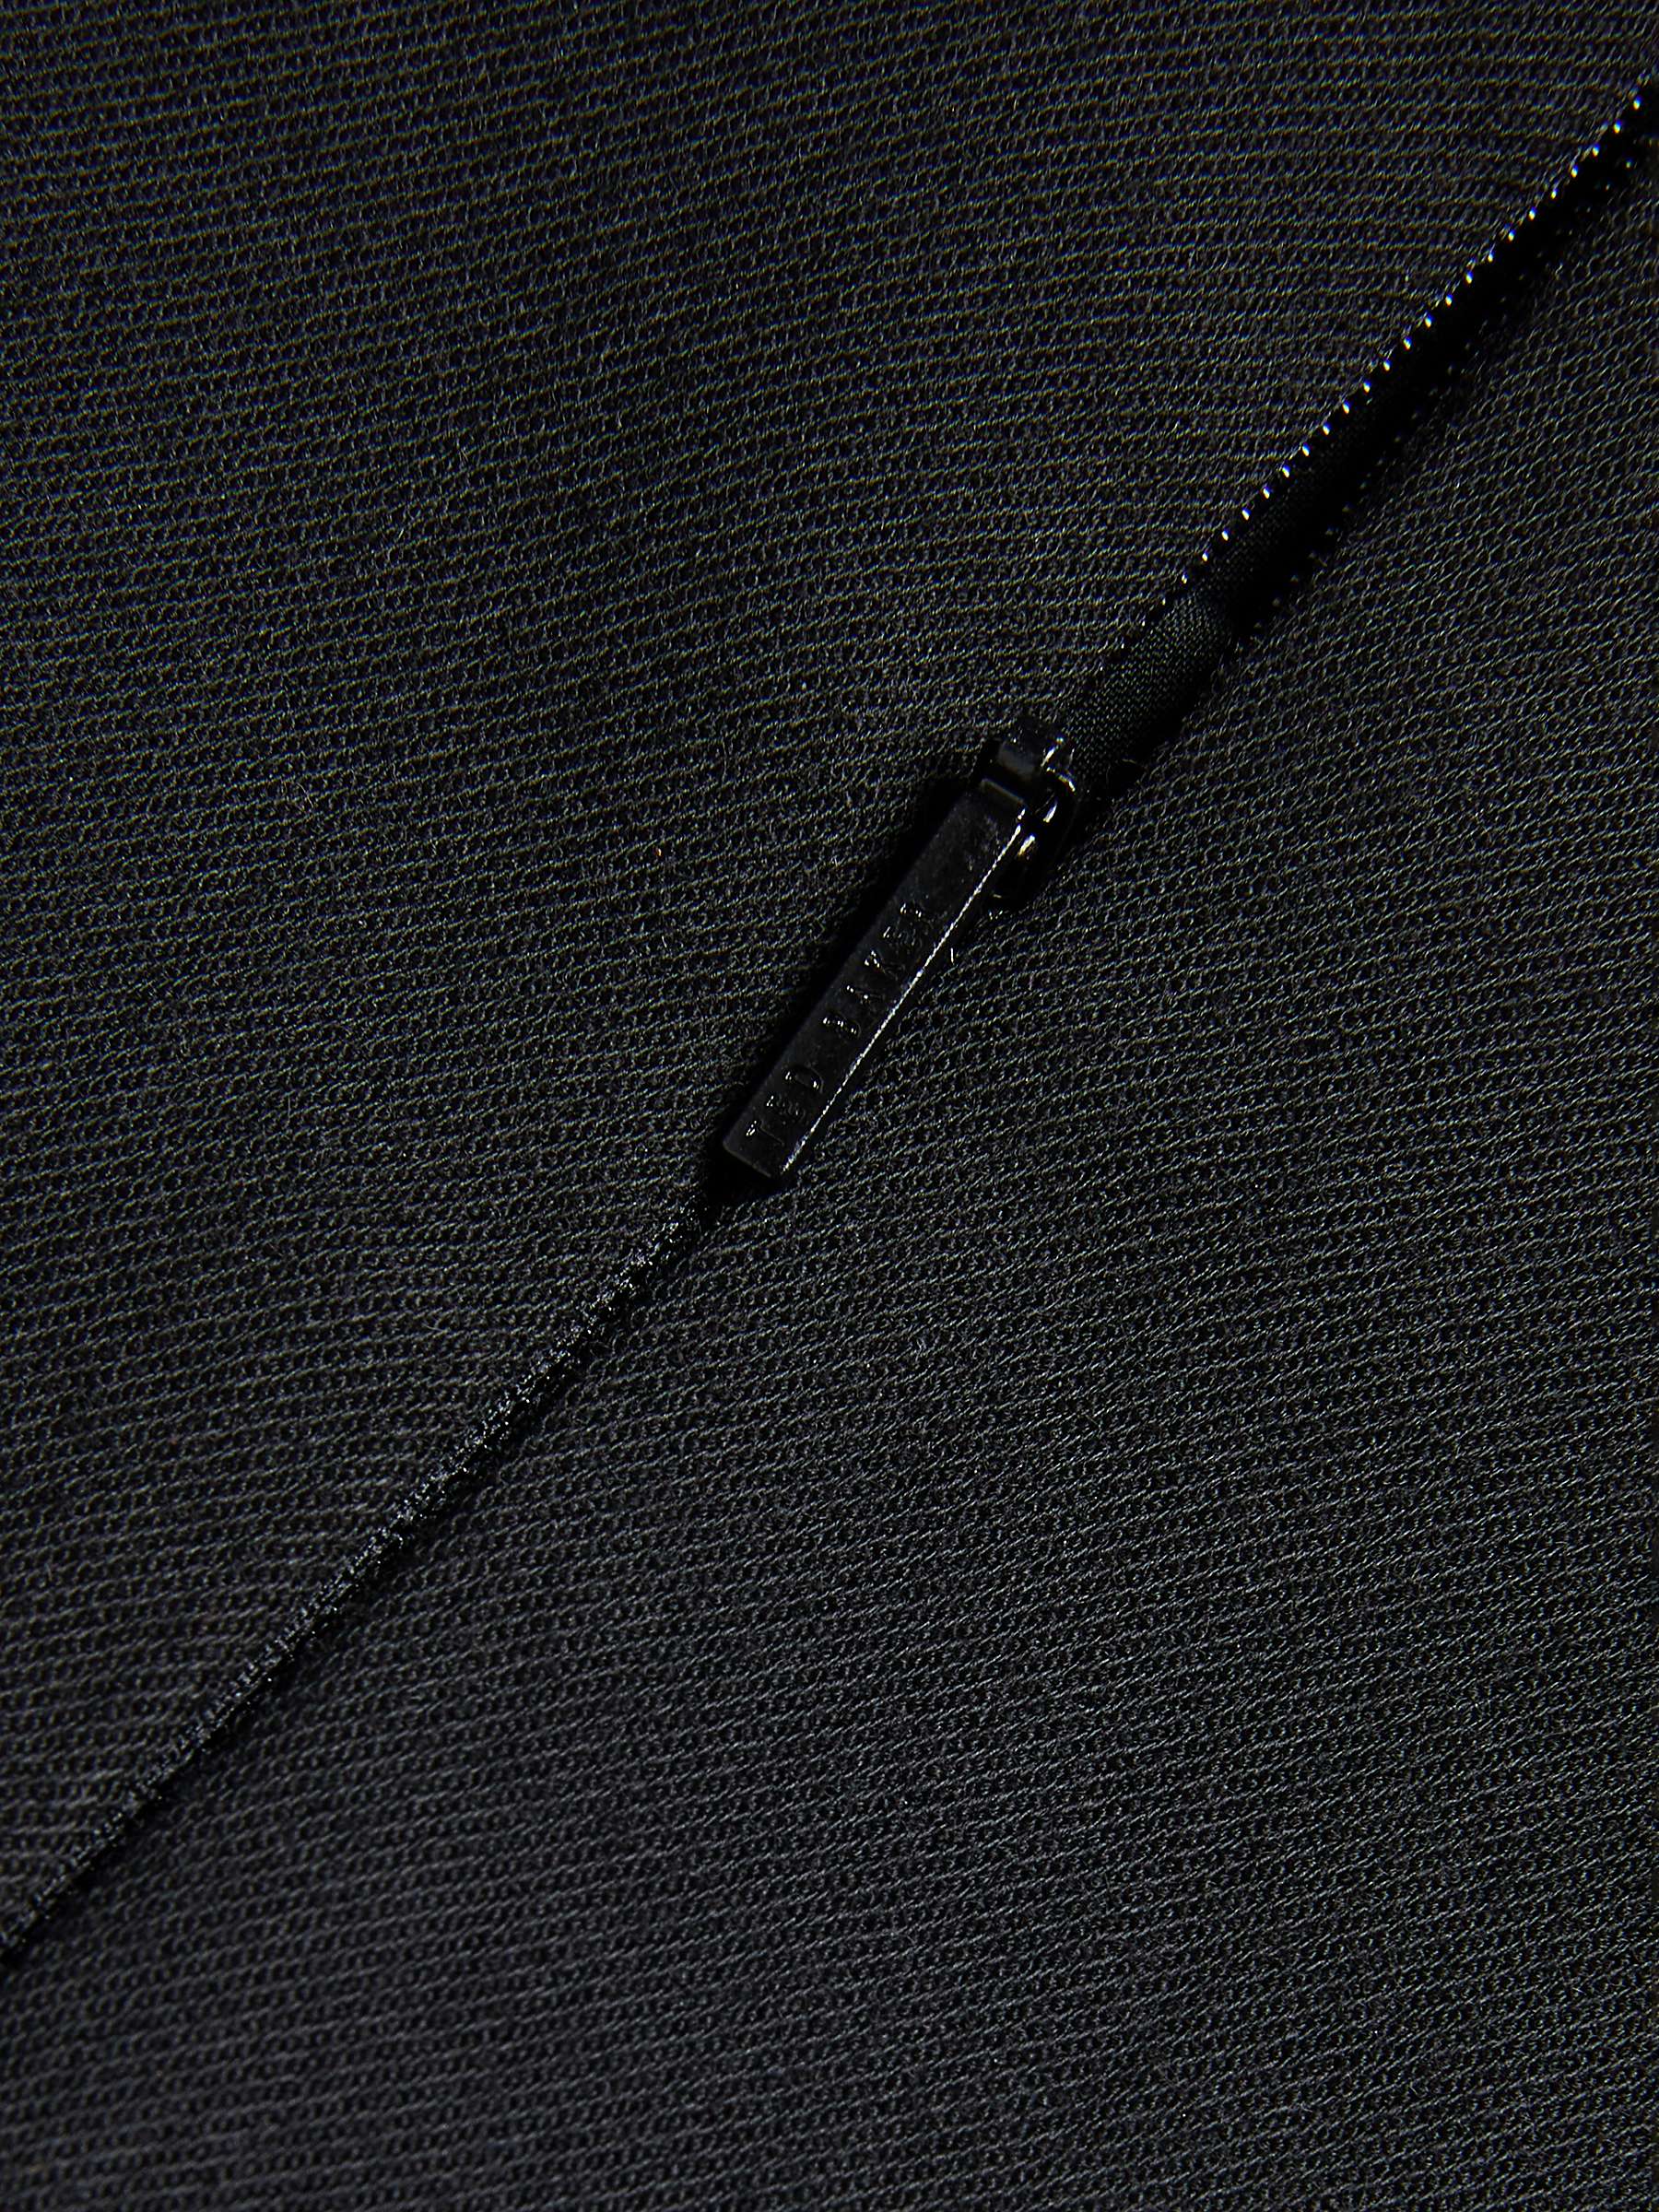 Buy Ted Baker Manabus Tailored Front Split Skirt, Black Online at johnlewis.com